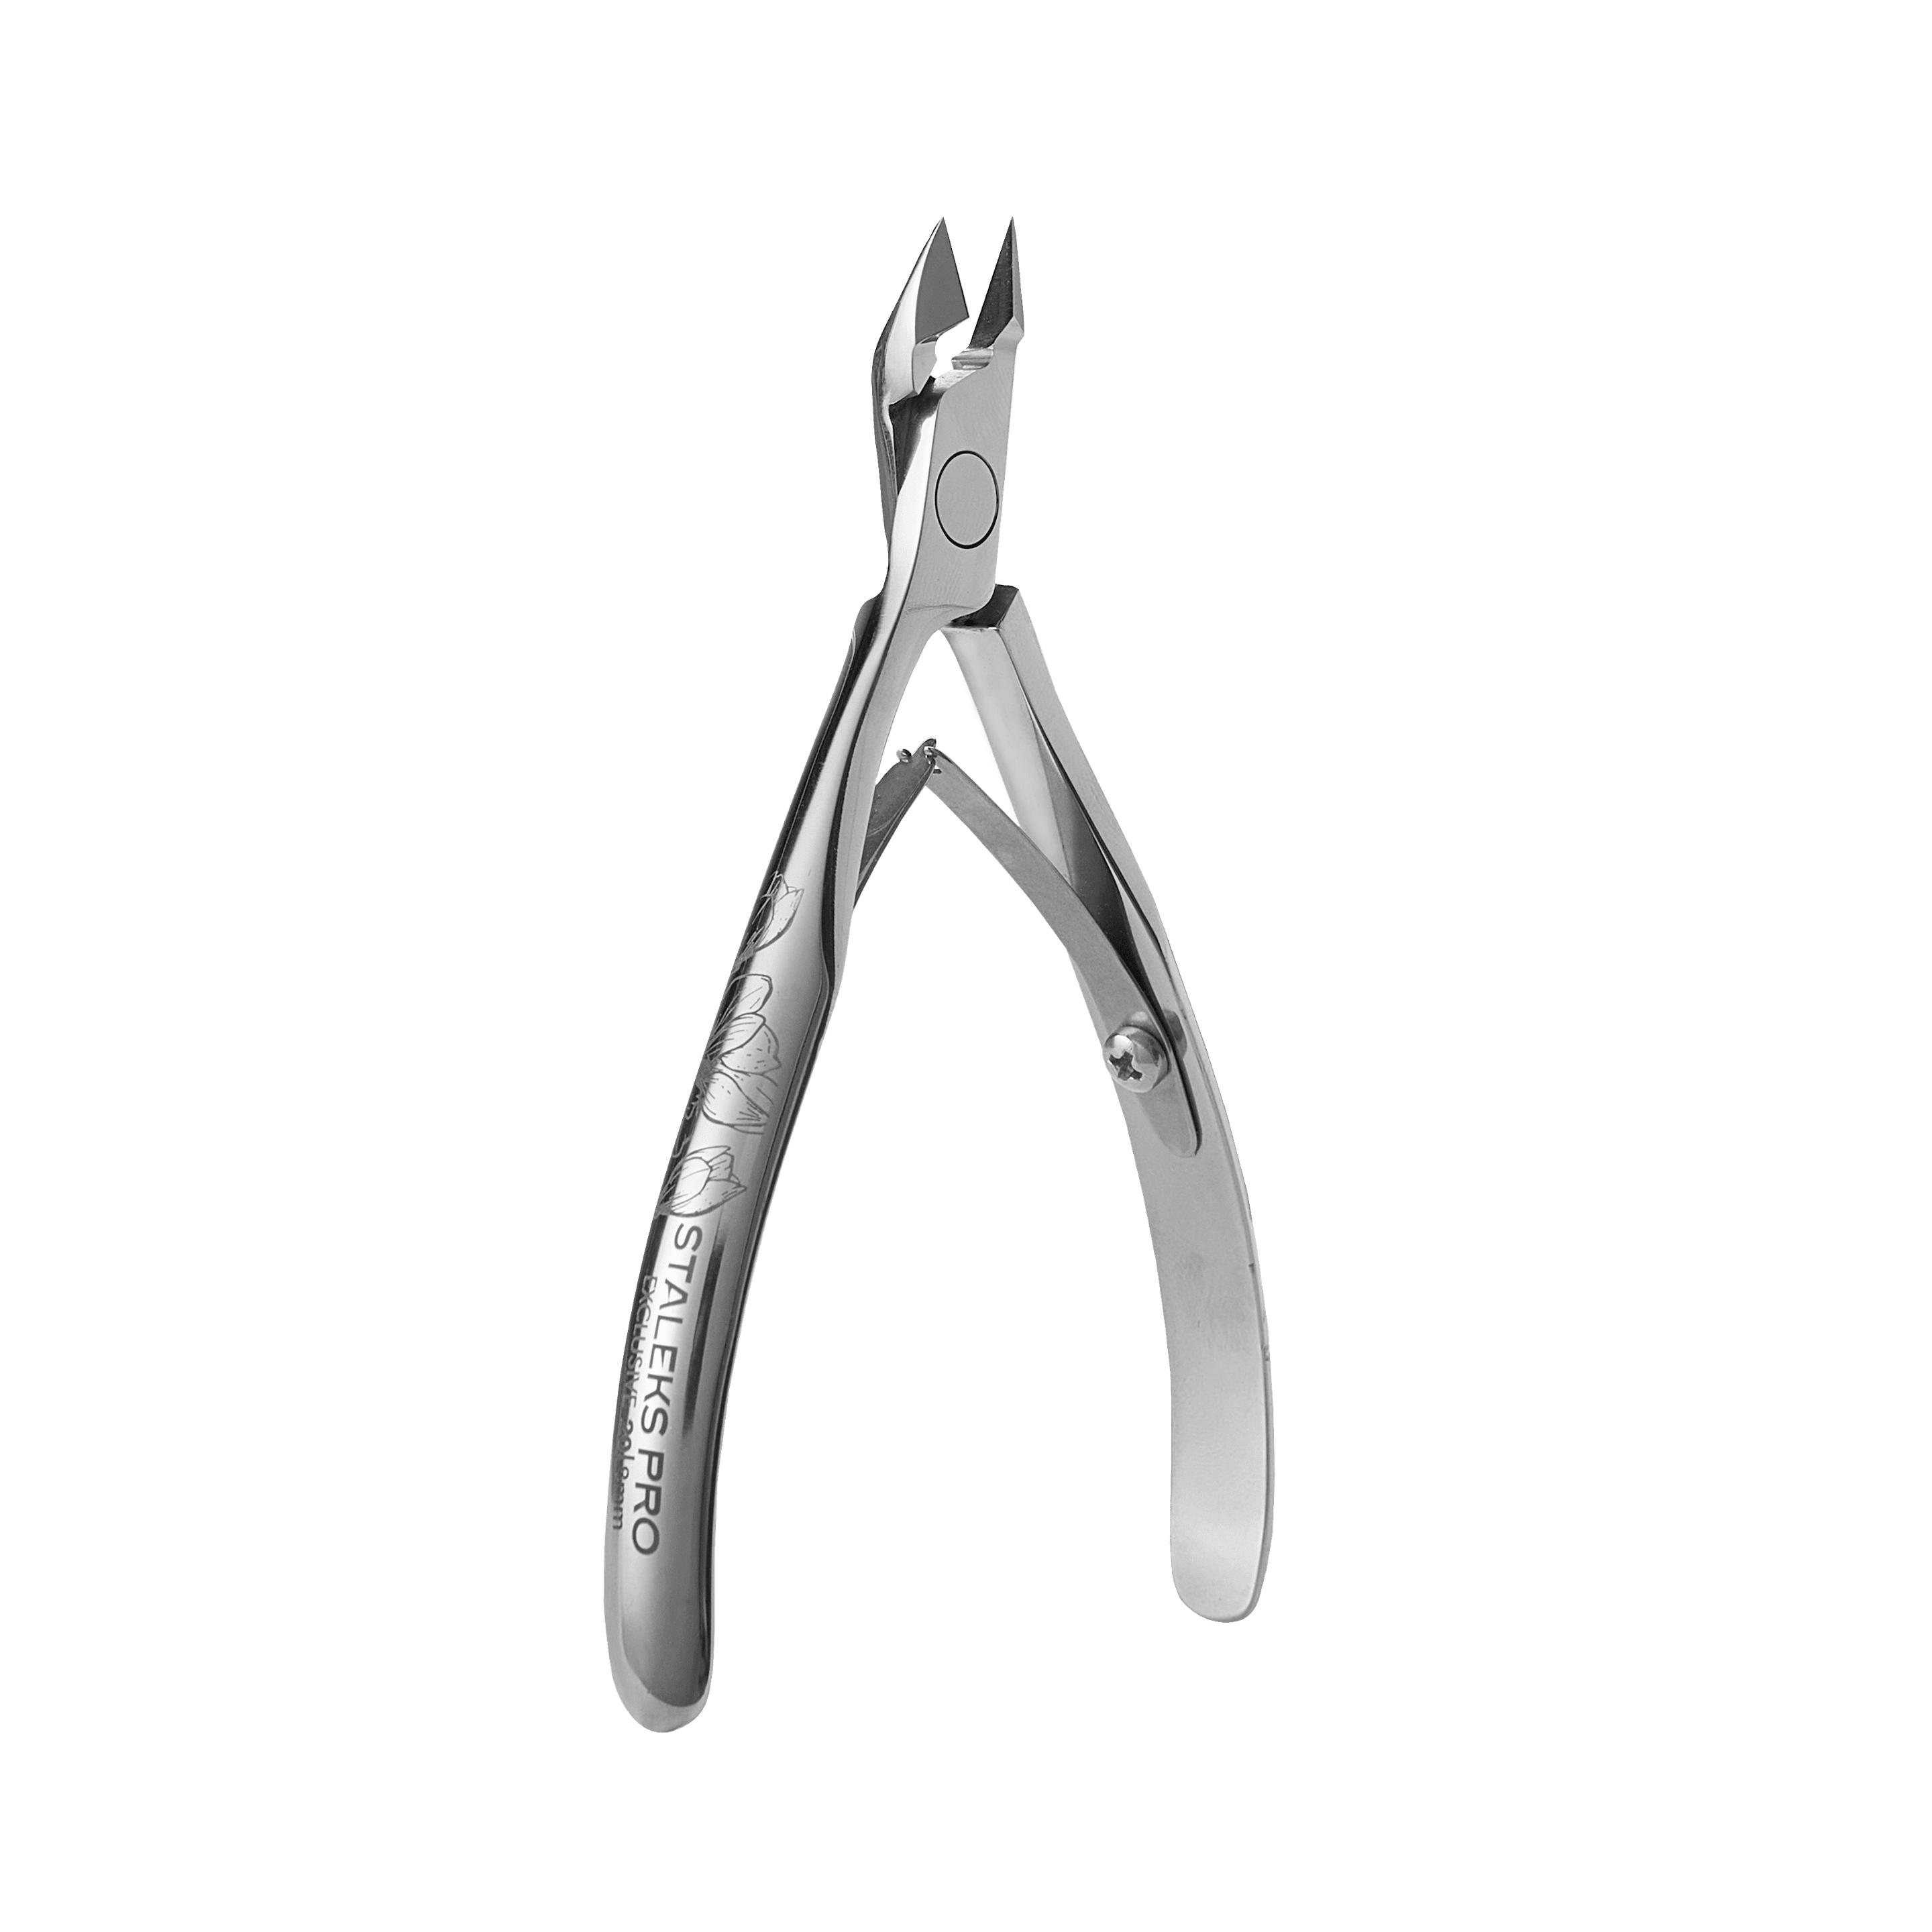 NX-20-8 scissors